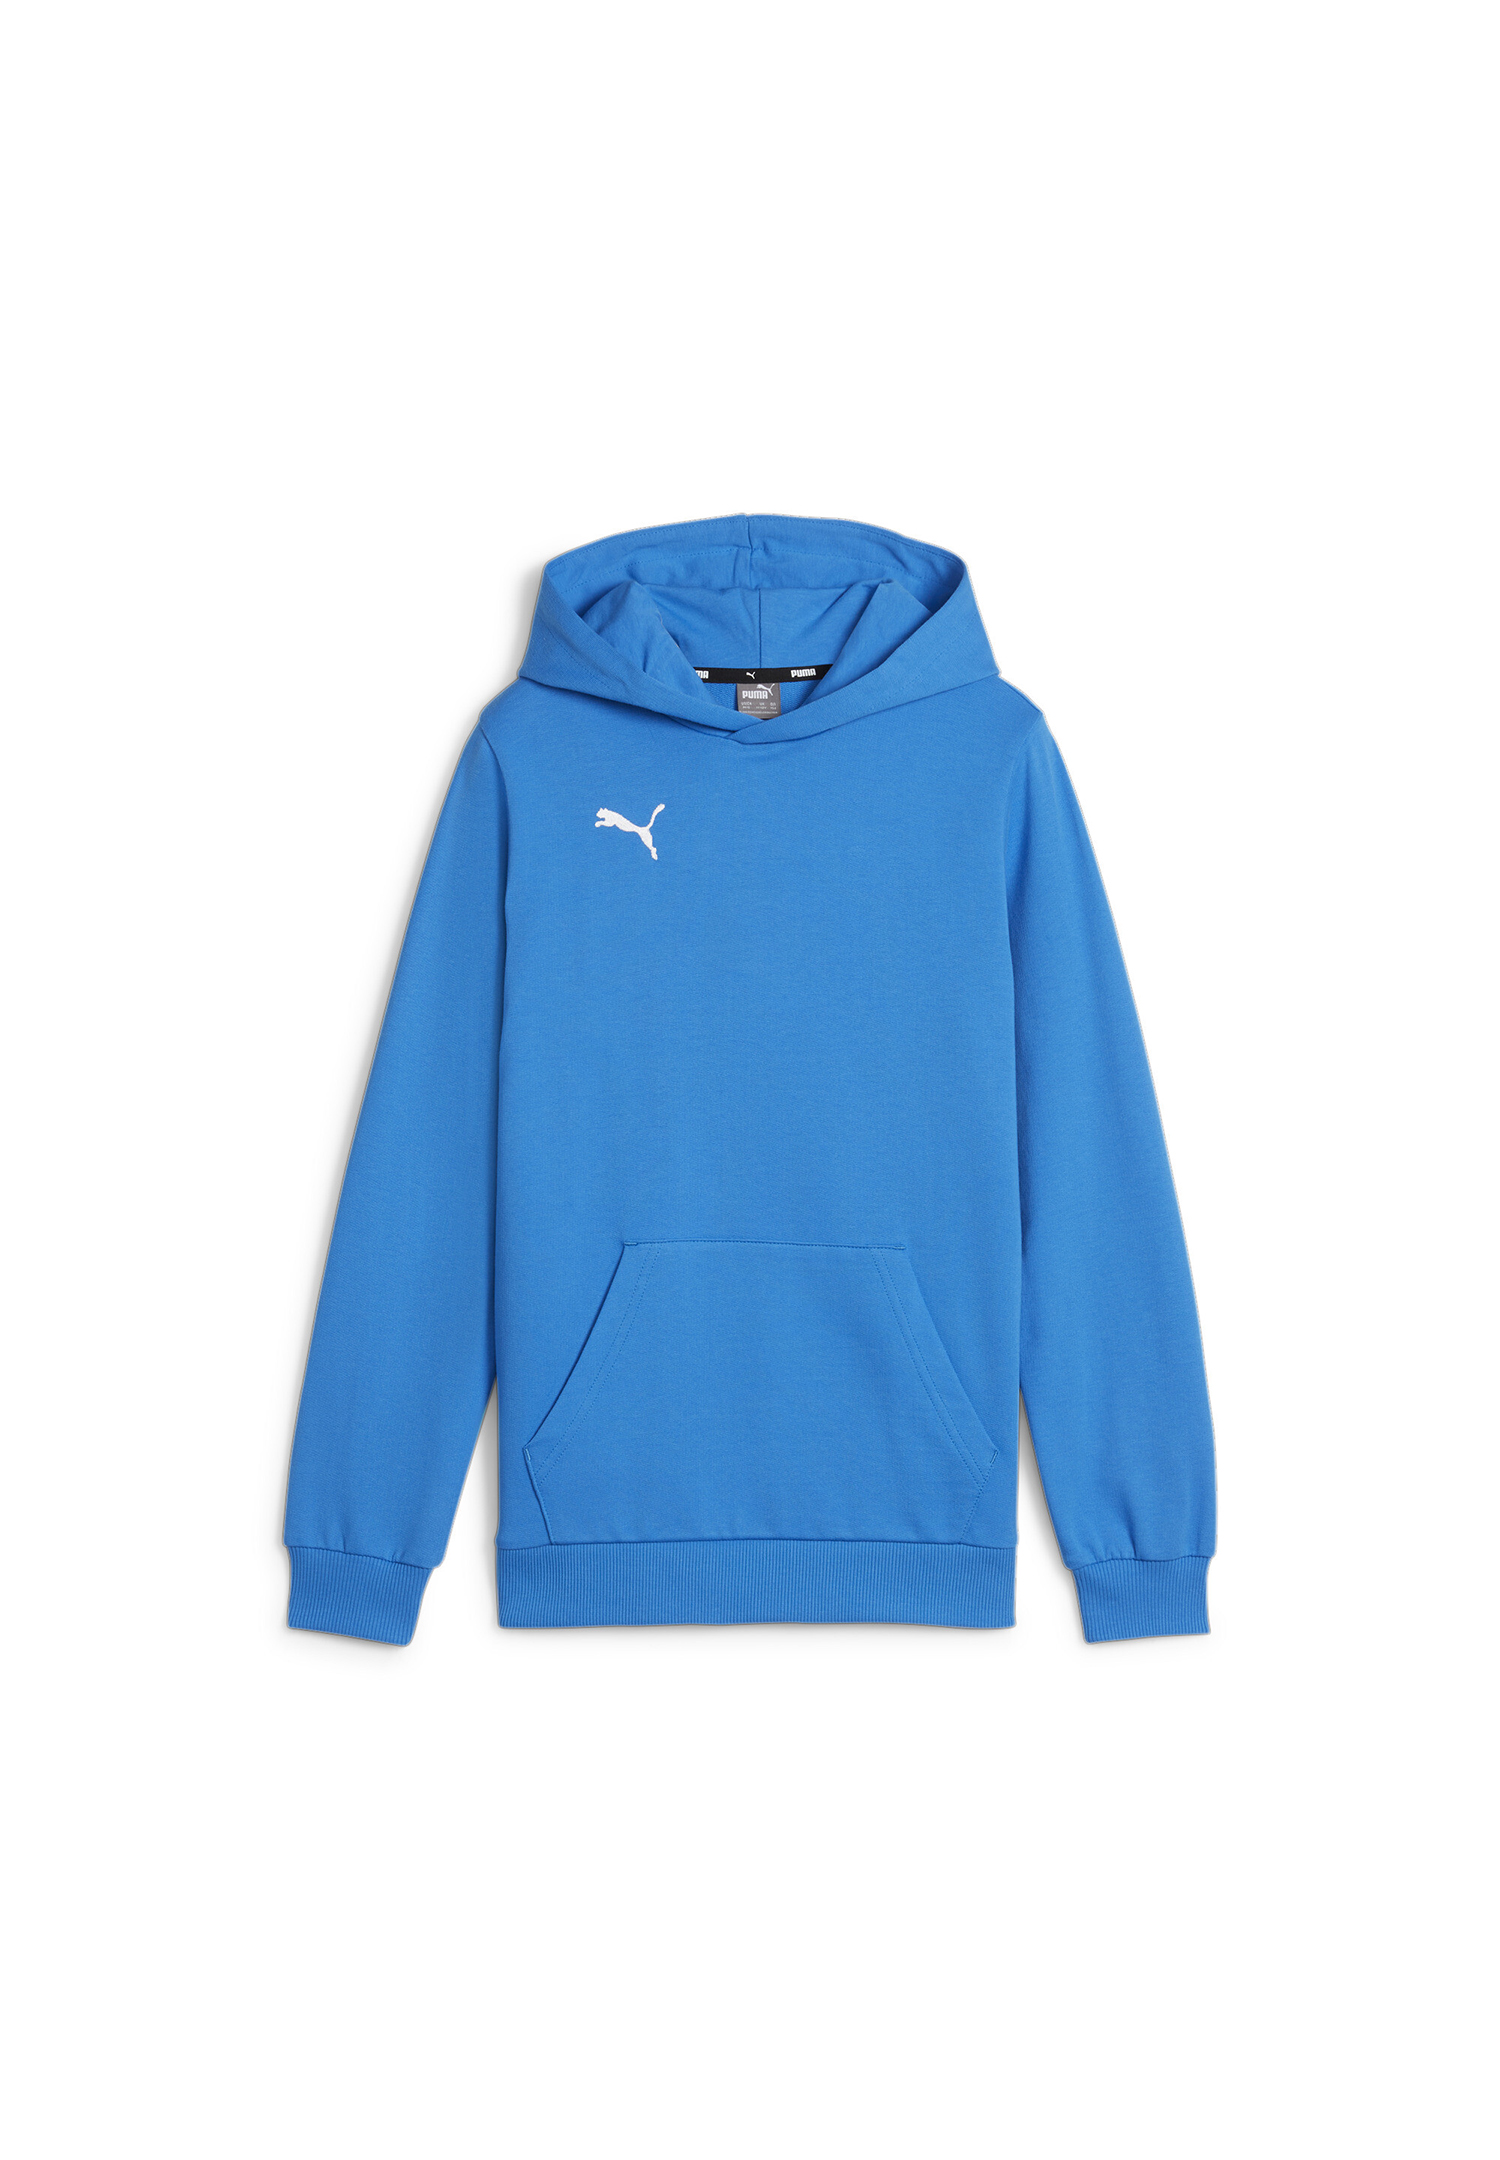 PUMA Kinder teamGOAL Casuals Hoody Sweatshirt Pullover 658619 blau